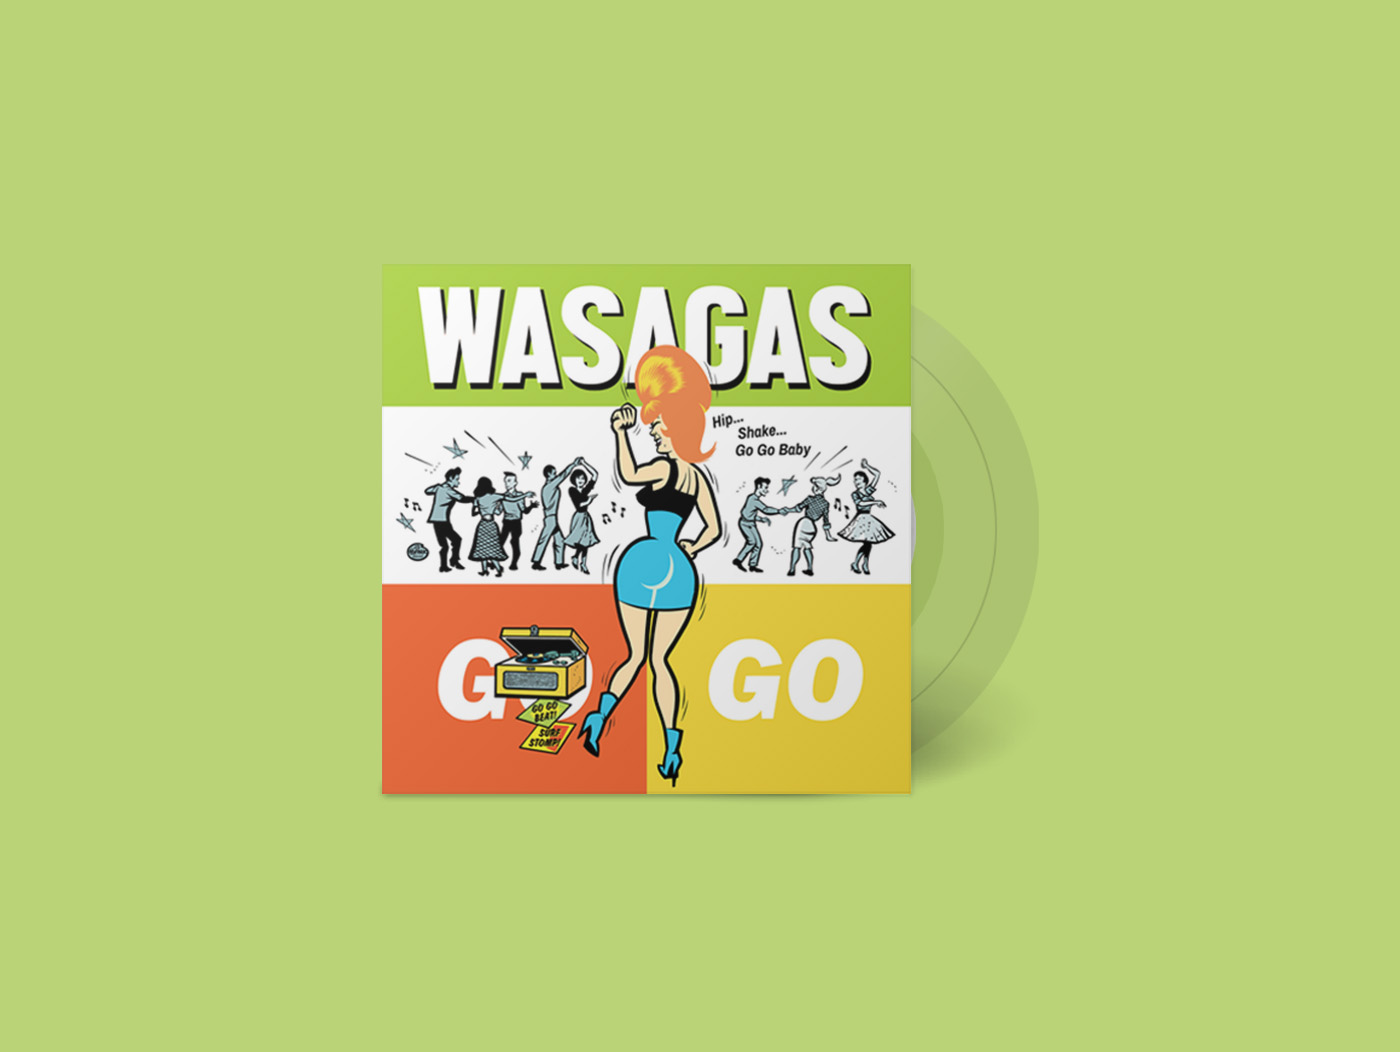 SRW184a_bandcamp_vinyl_7in_small_template Mark Malibu & the Wasagas “Hip Shake Go-Go Baby” 7" vinyl - SHARAWAJI.COM